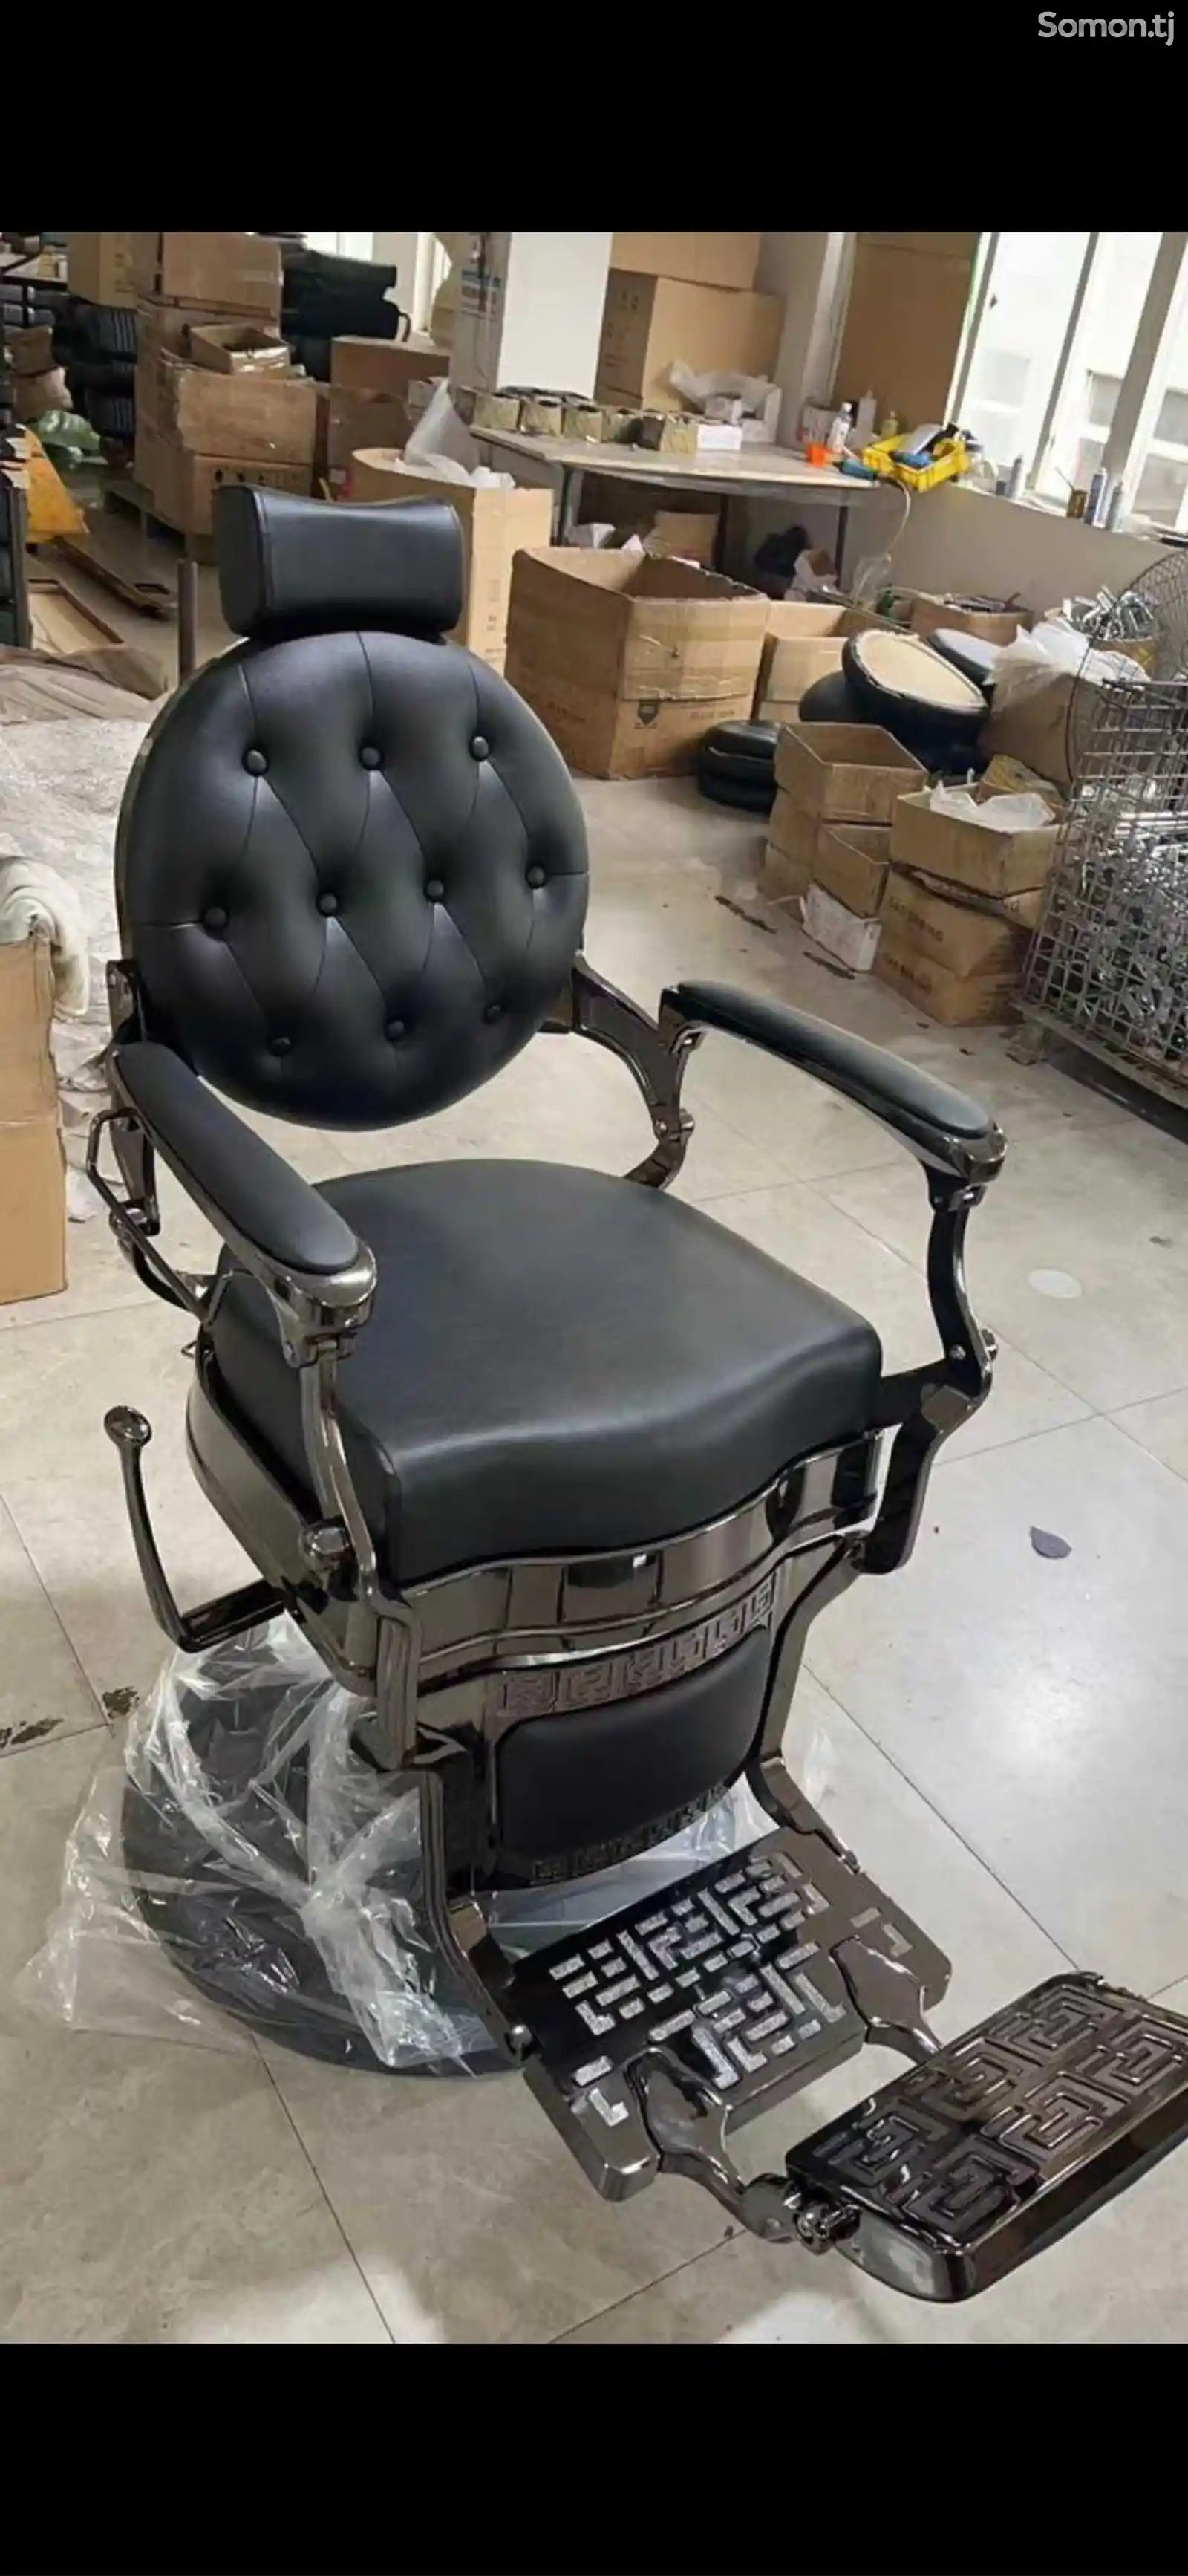 Кресло для салона красоты-1